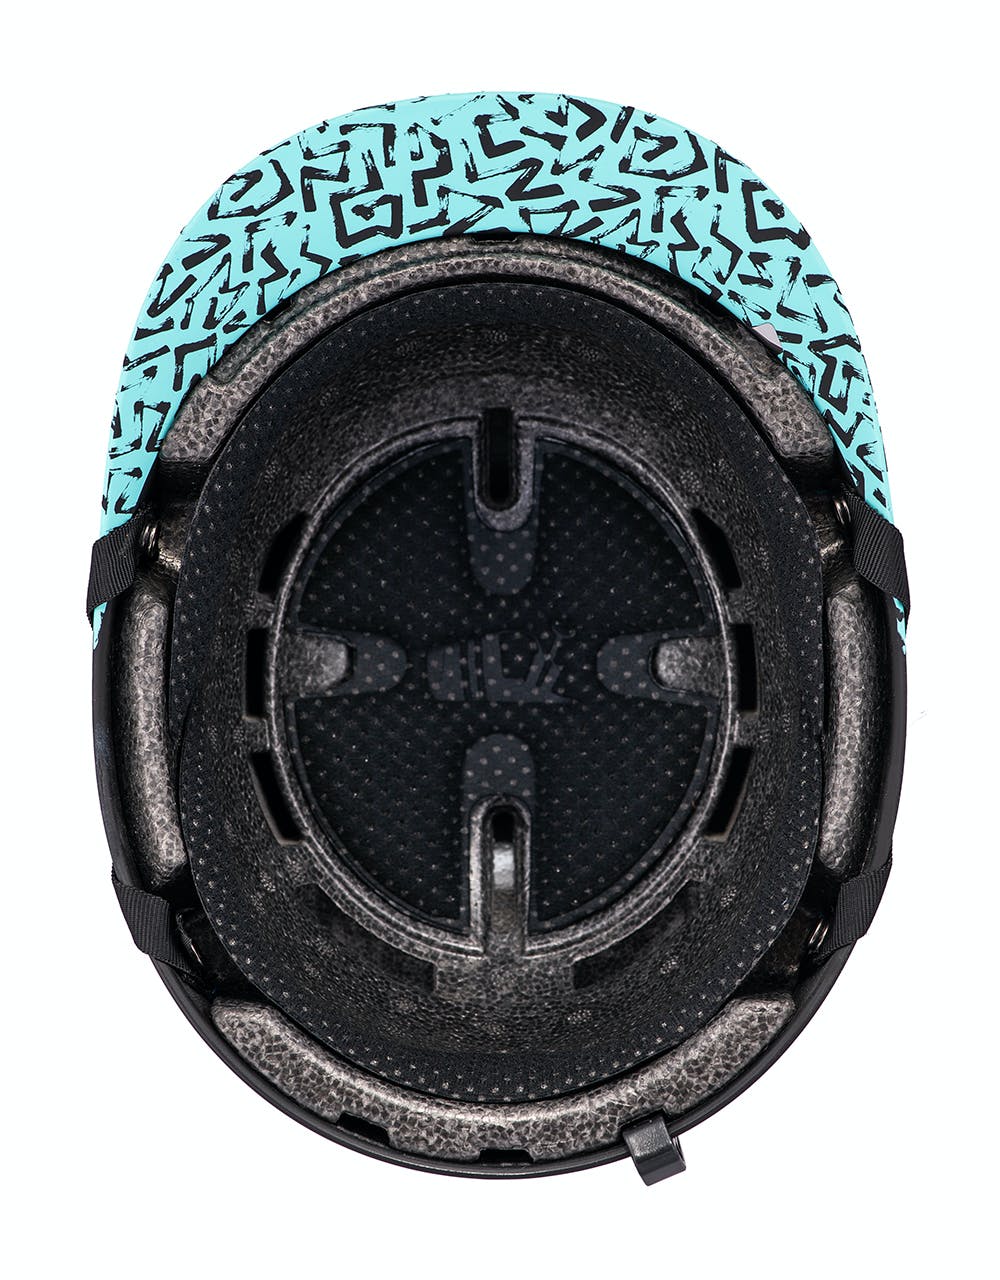 Sandbox Classic 2.0 2020 Snowboard Helmet - Throwback